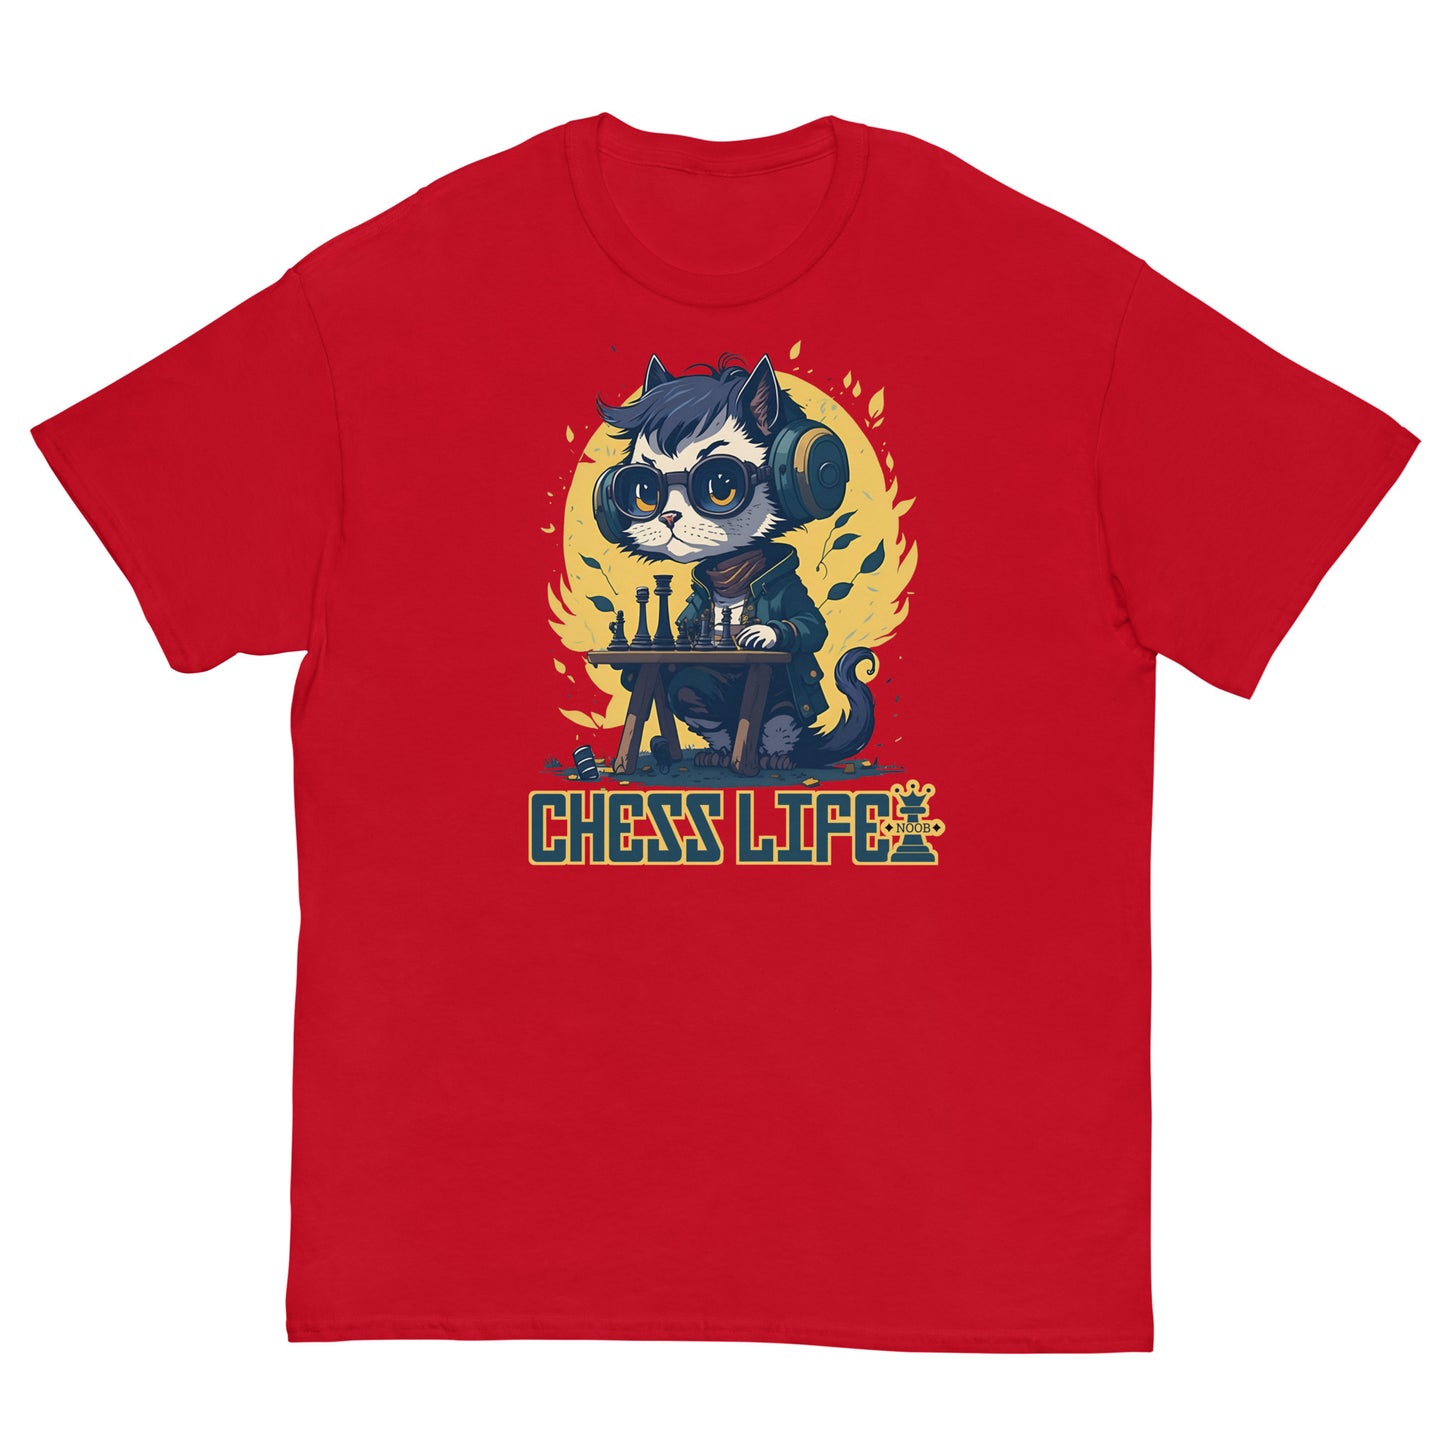 Chess Life Cool Cat | Classic T-Shirt